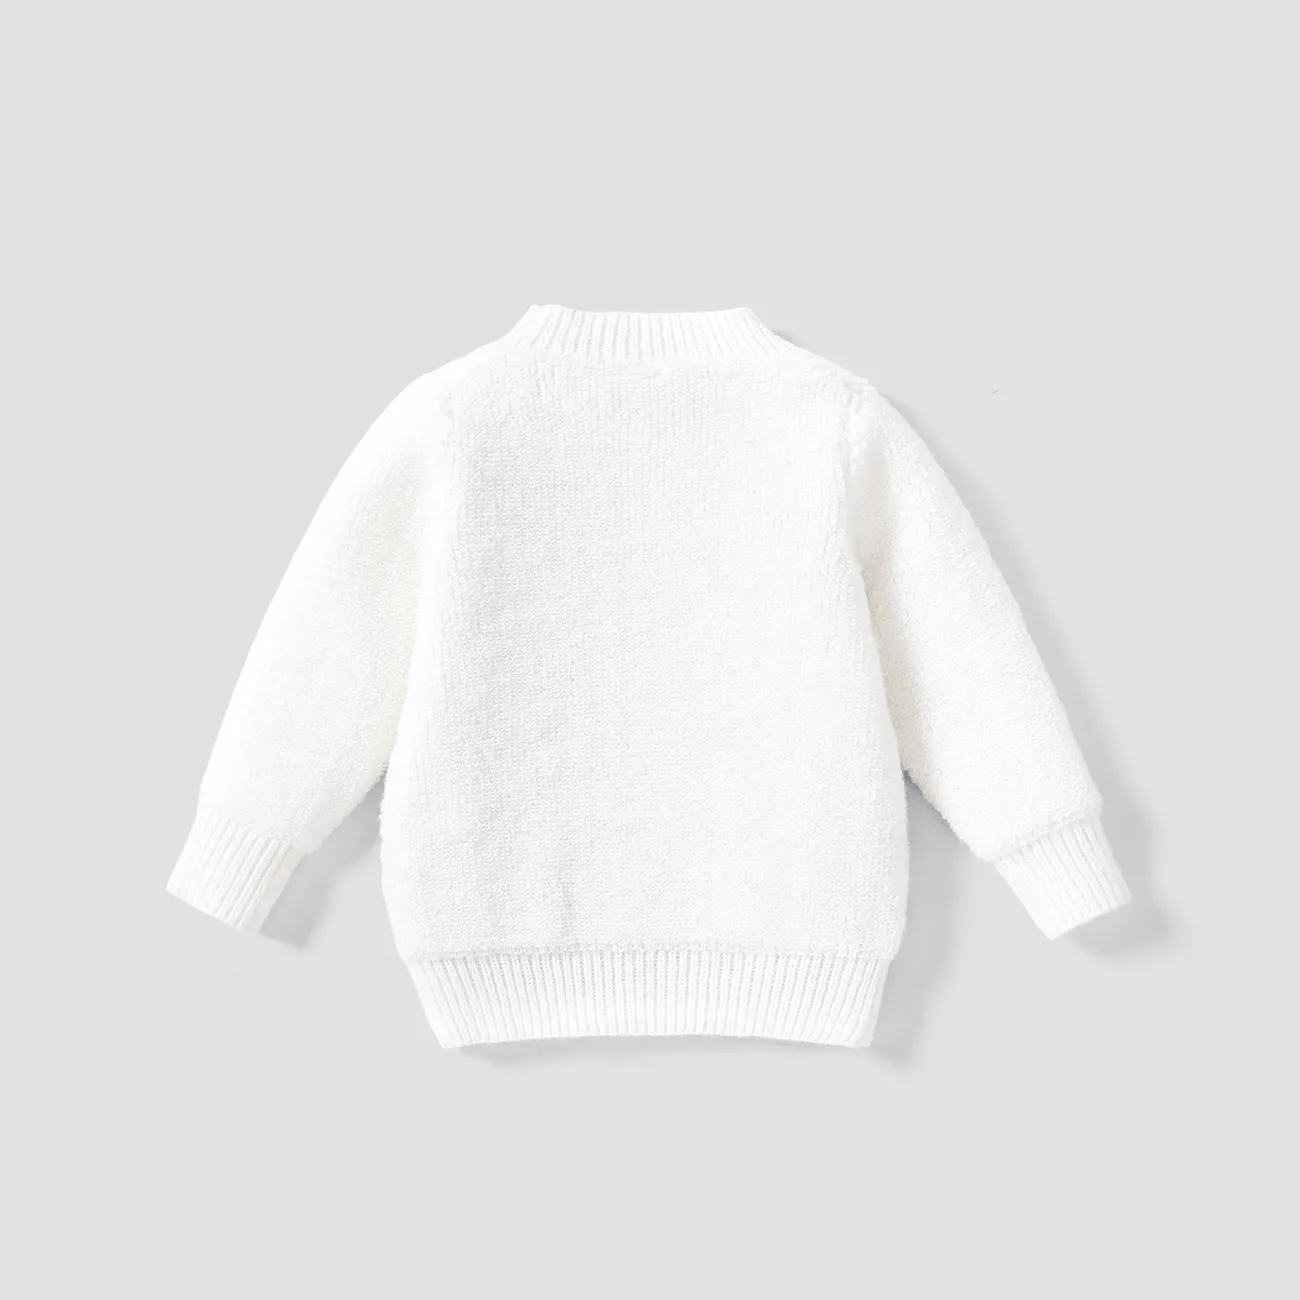  Kid Boy/Girl Childlike Expression Sweater  weiß big image 1